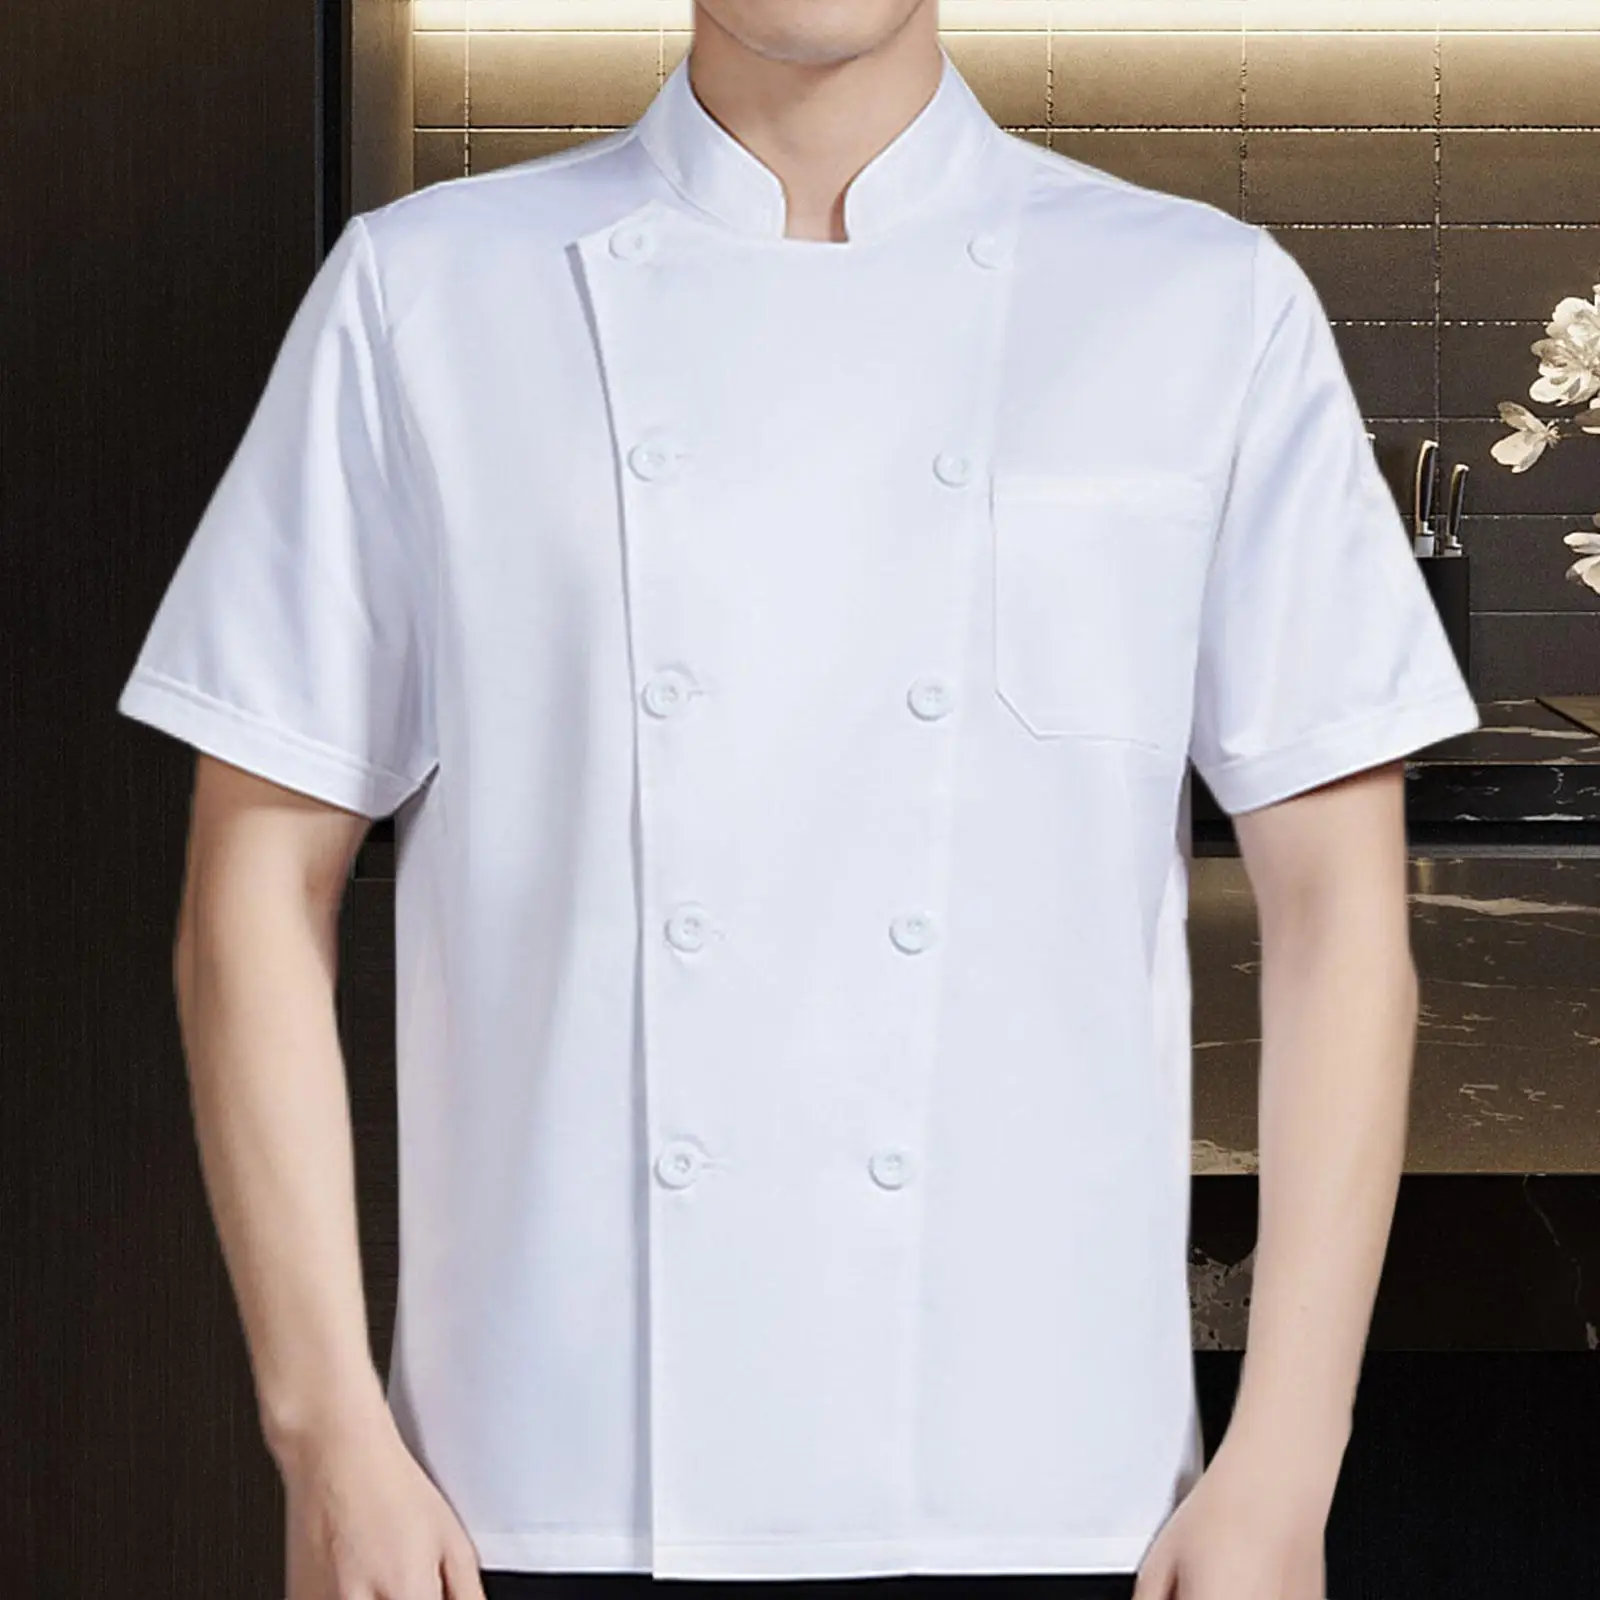 Chef Jacket Chef Coat Waiter Apparel Shirt Workwear Uniform for Food Industry